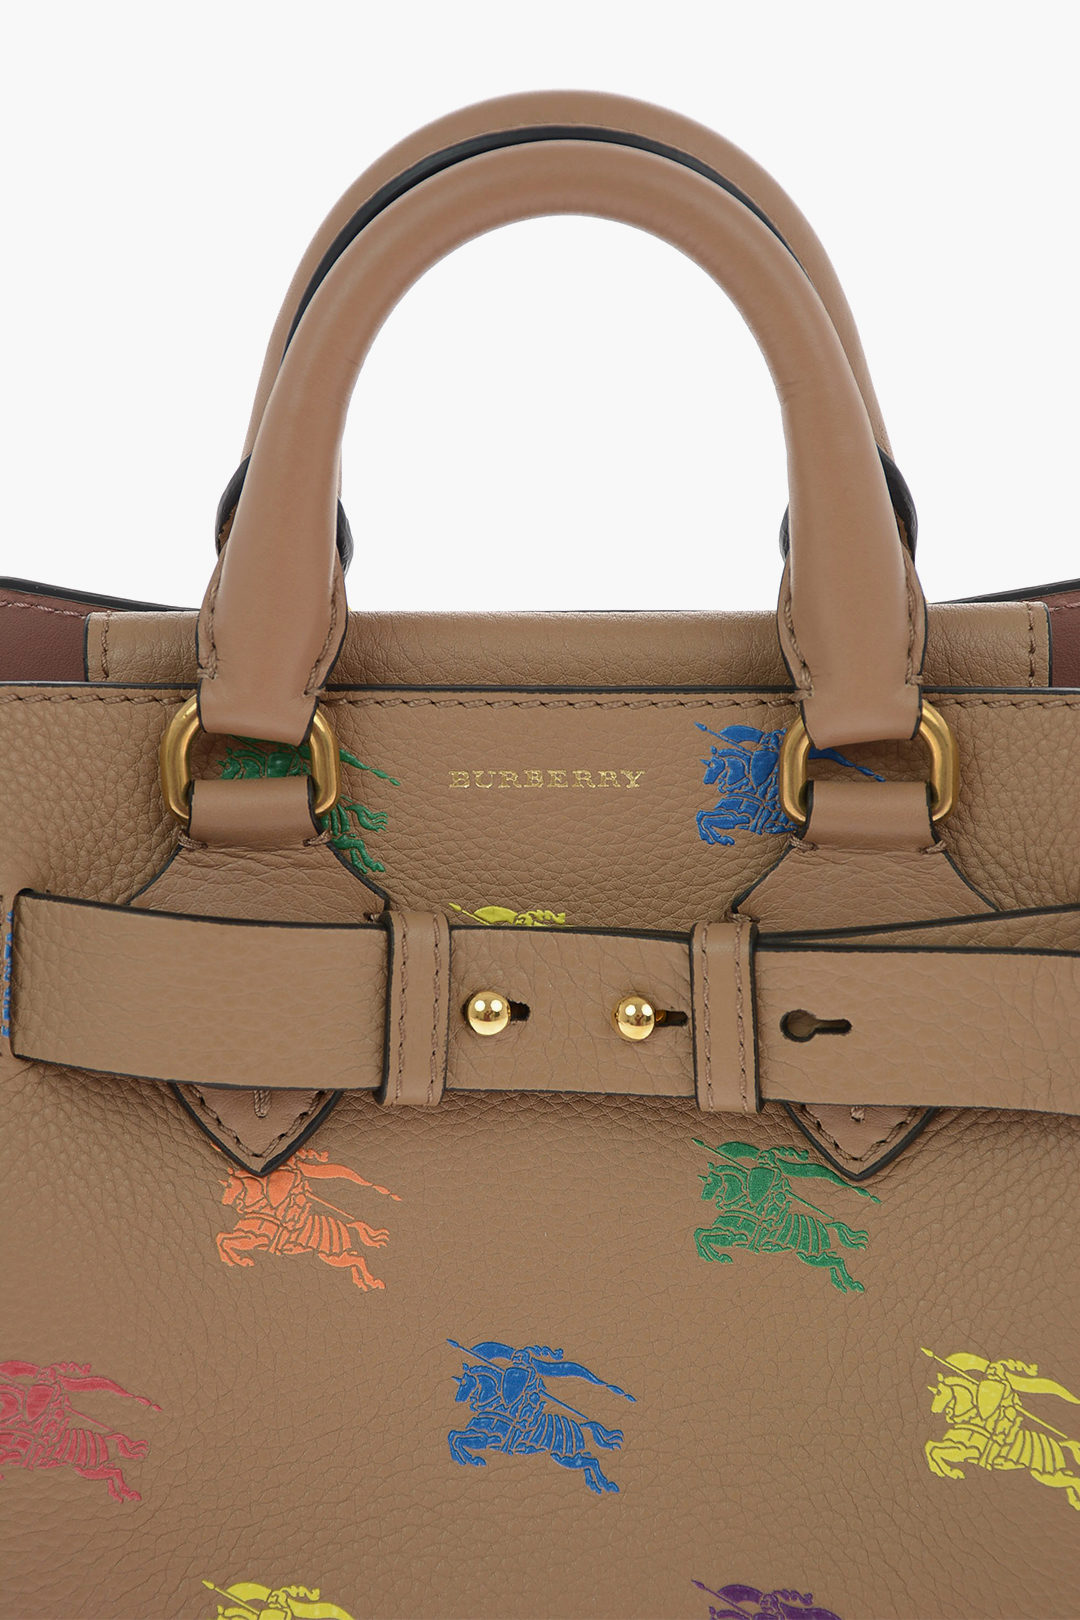 Burberry Ladies Rainbow Leather Belt Bag Strap 4080163 5045555949492 -  Handbags - Jomashop